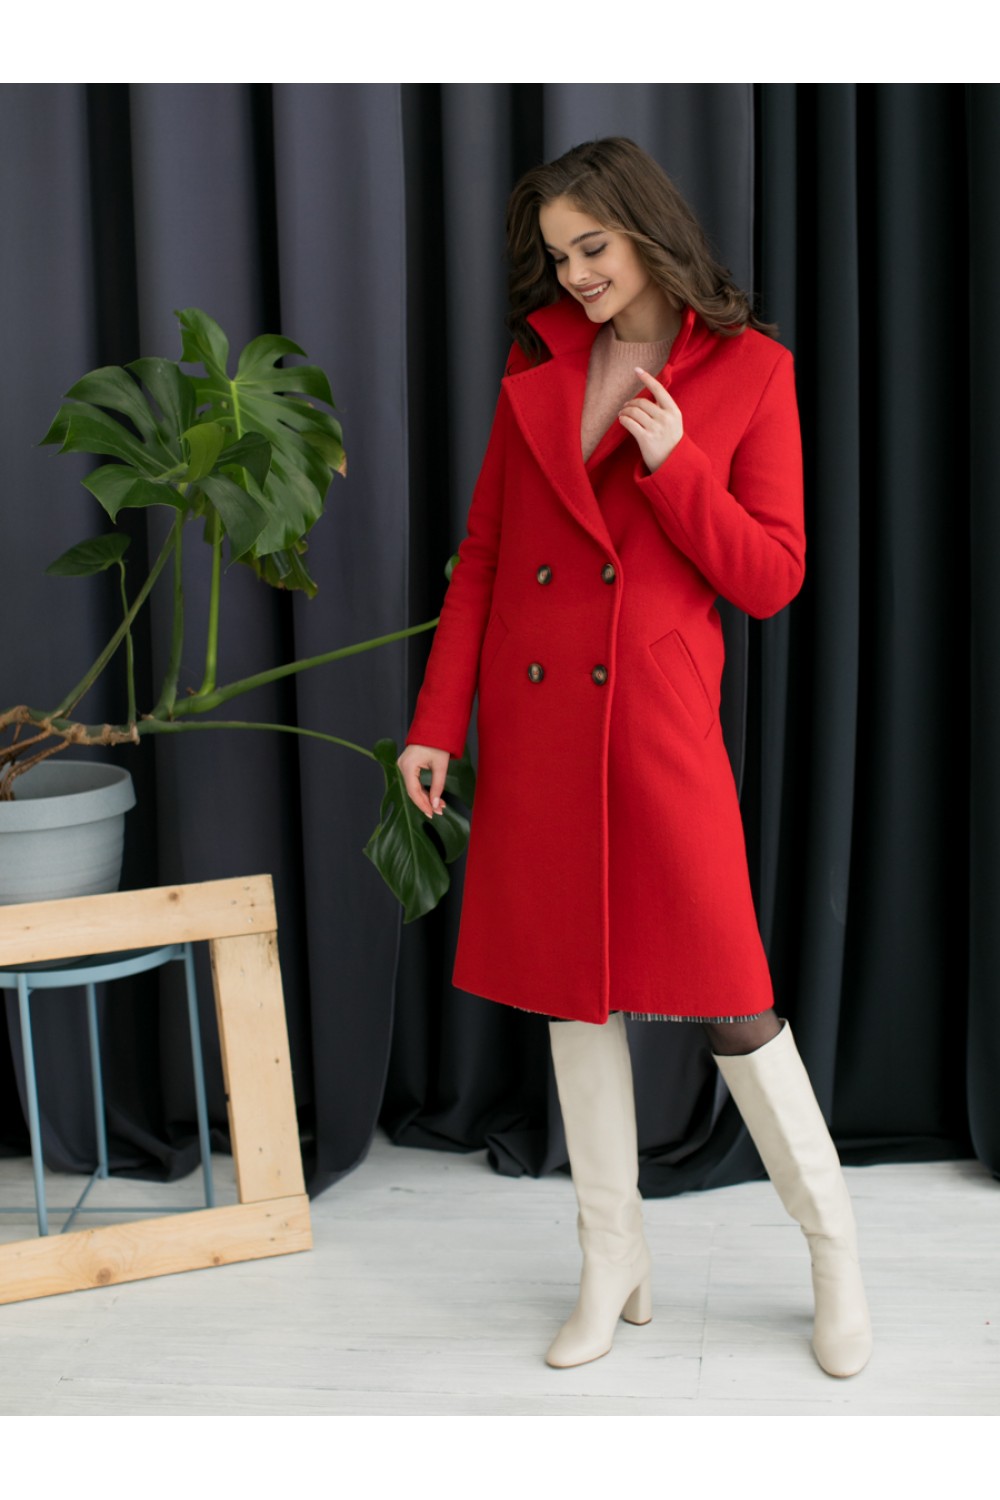 Утепленное пальто на пуговицах AS070mwK/красный